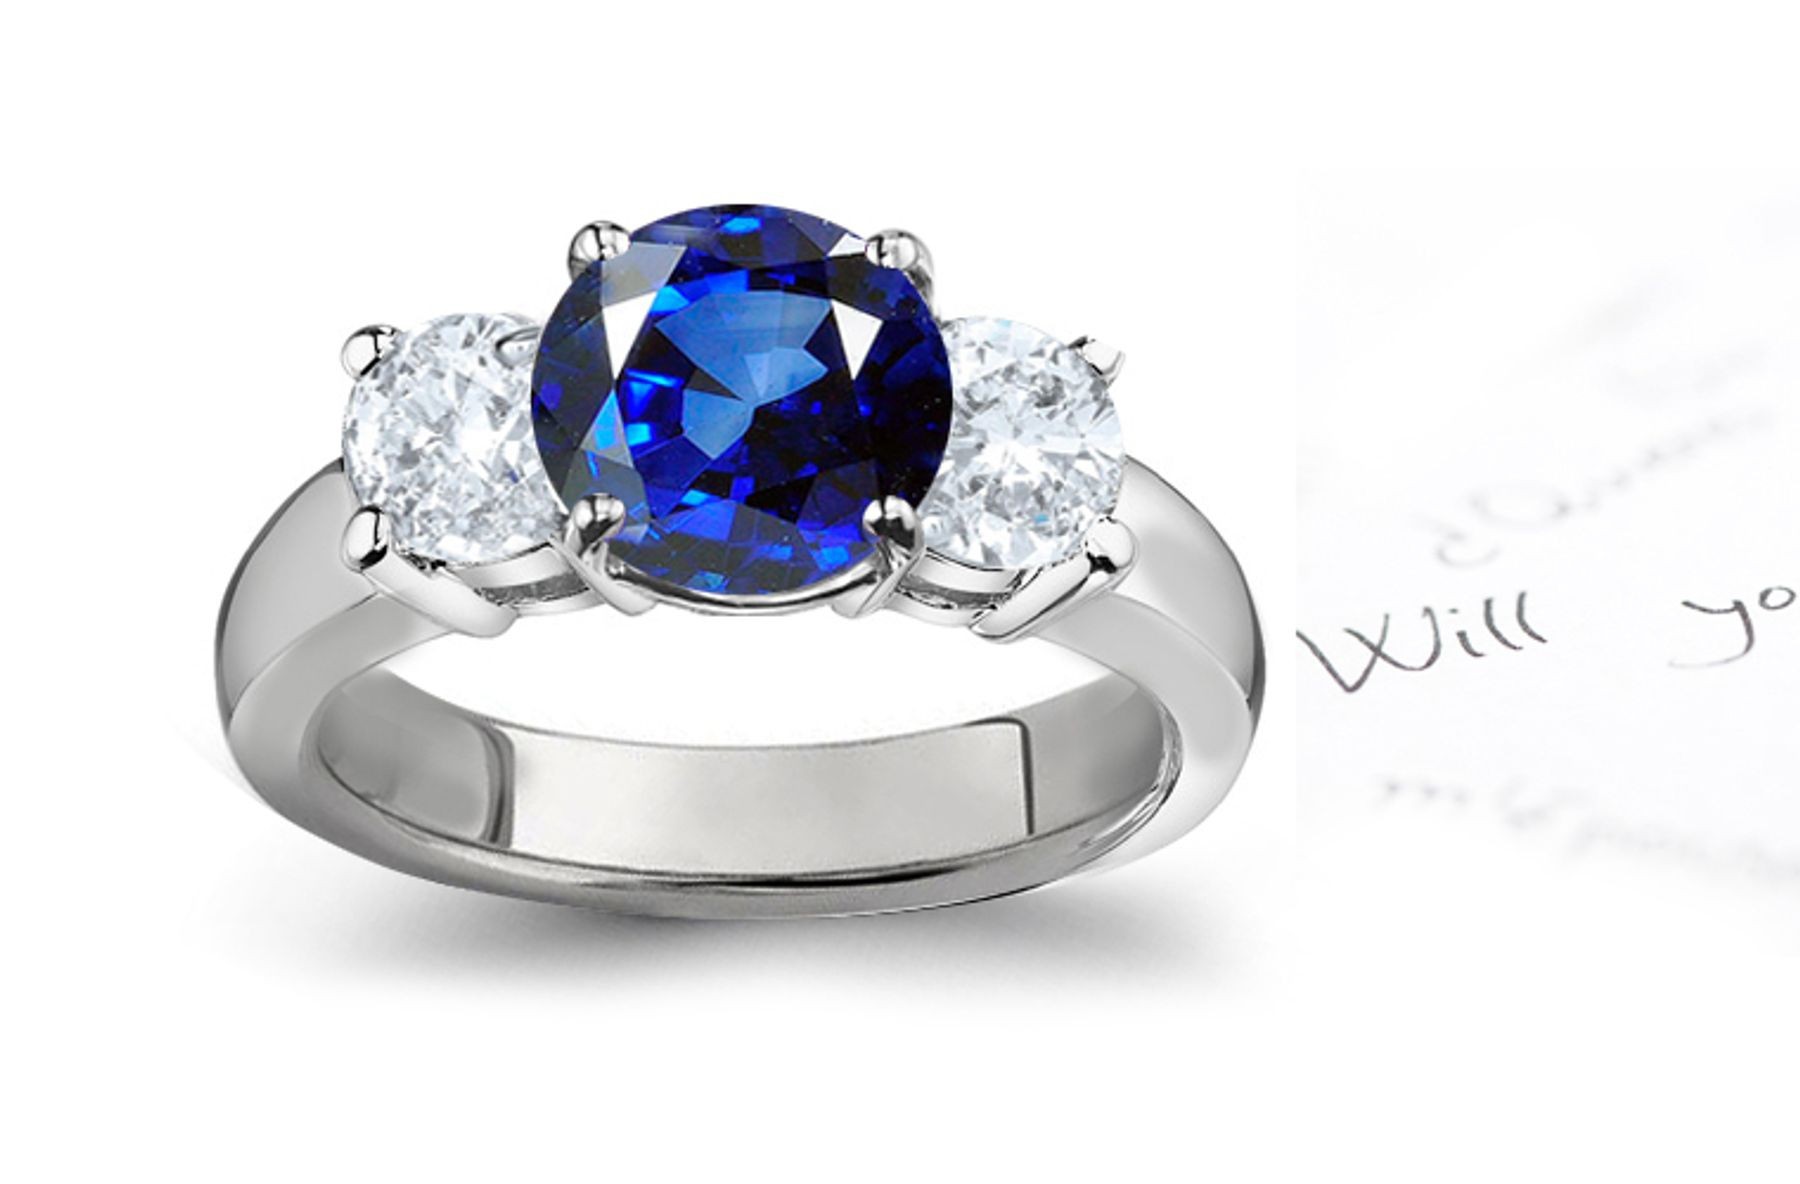 Burma Blue Sapphire Diamond Engagement Rings: Platinum ring with Round Diamonds and Round Sapphire.